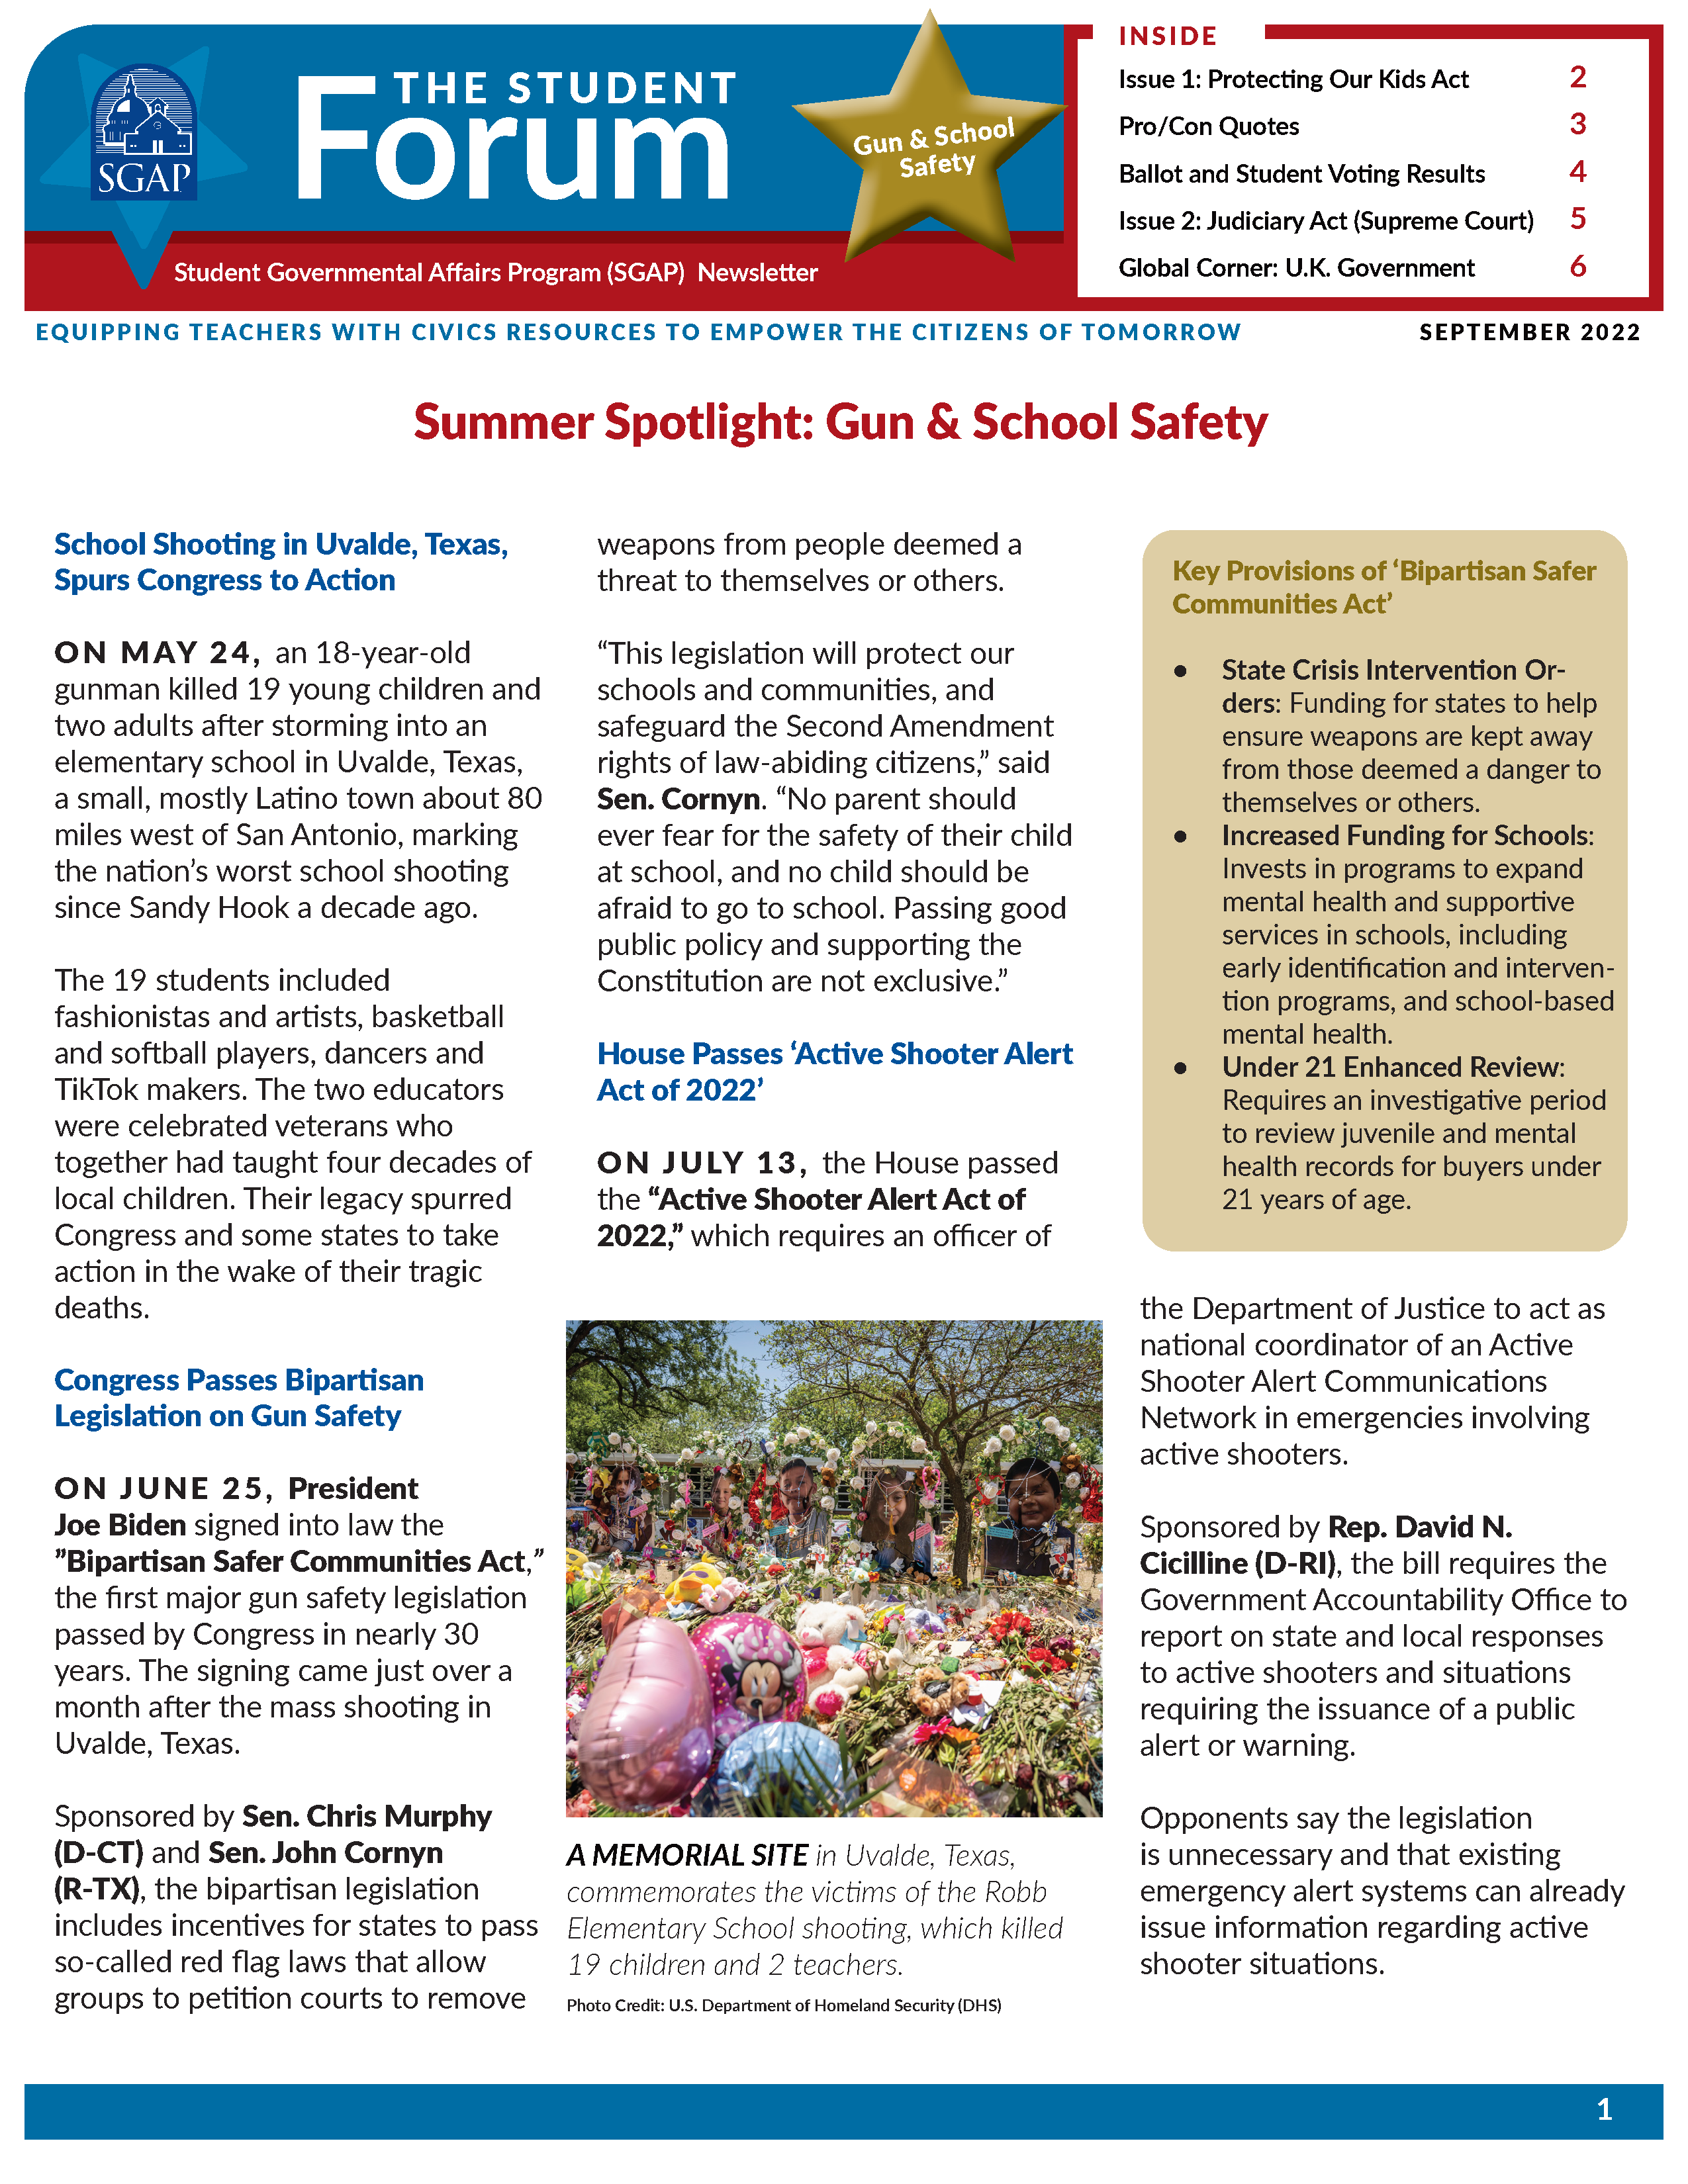 SGAP Newsletter for September 2022 (Gun Safety and Court Packing)